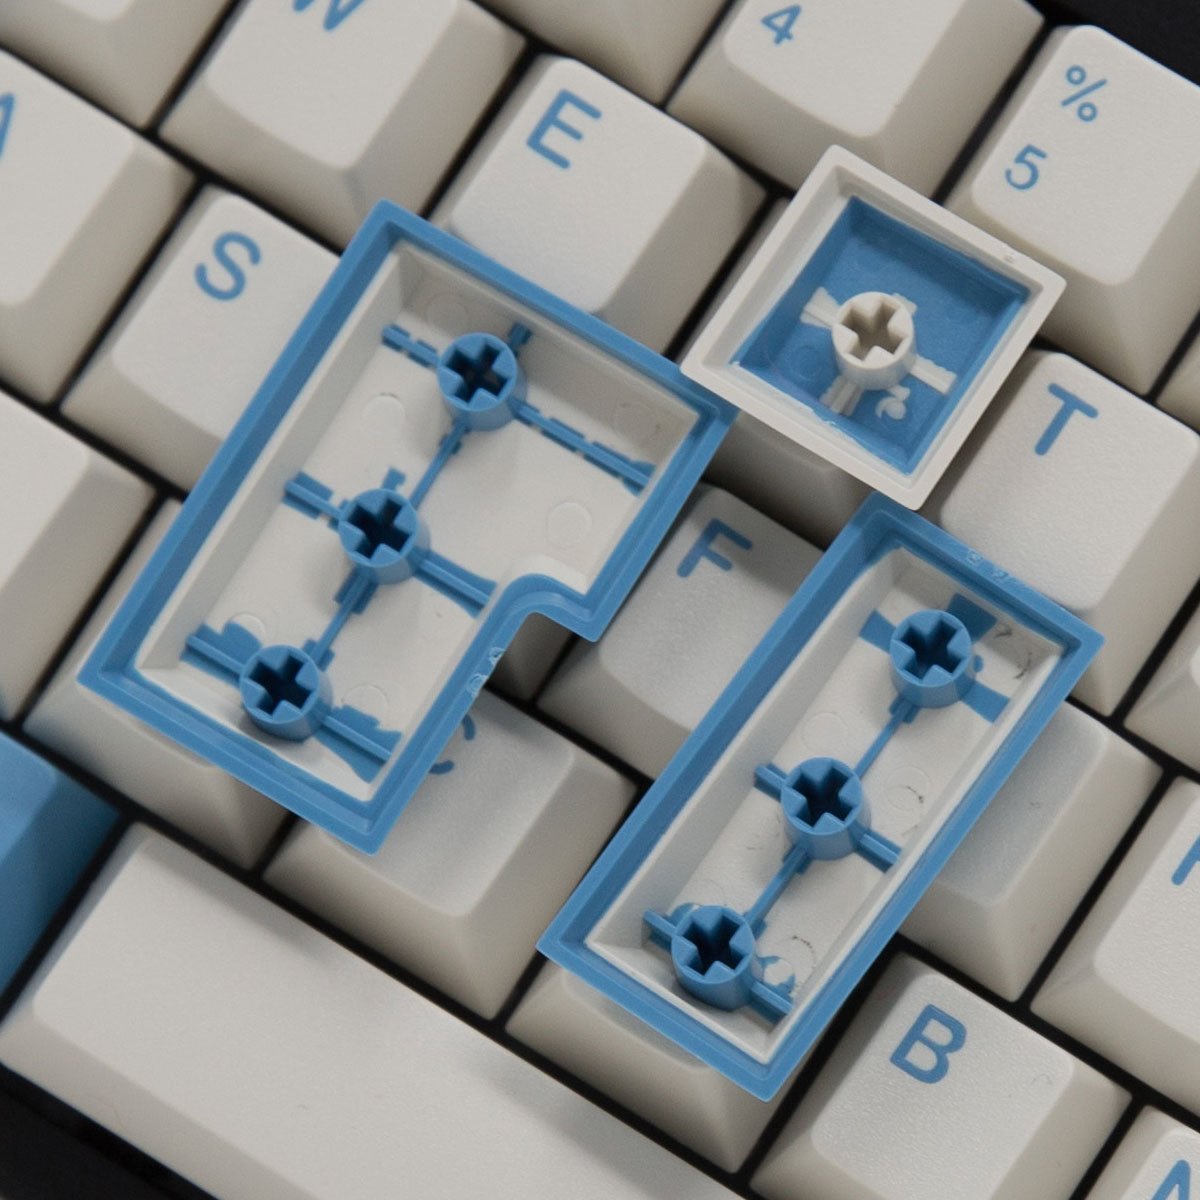 EnjoyPBT Blue and White Keycap Set Doubleshot ABS - Divinikey